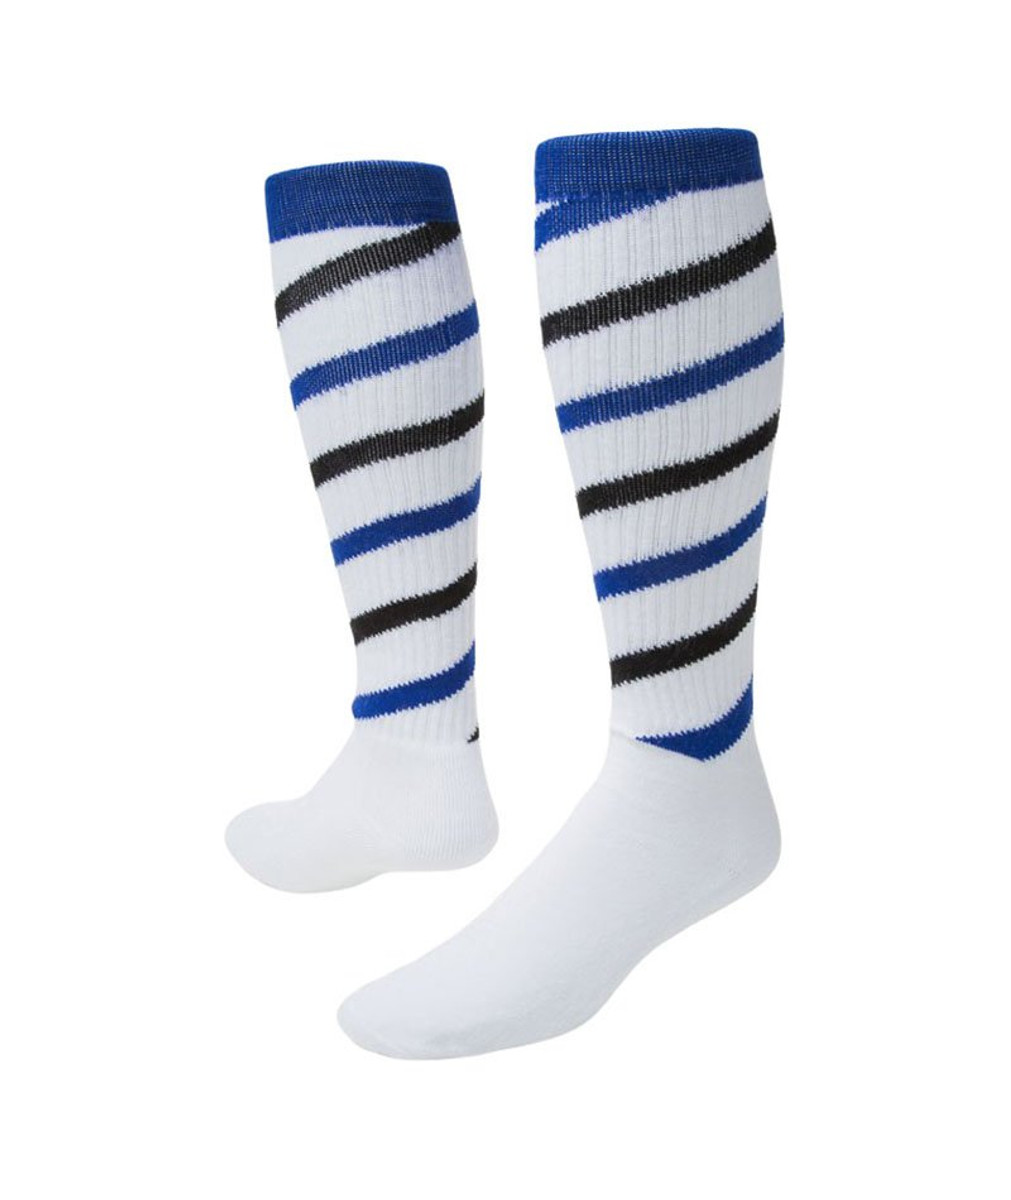 Cyclone Knee High Sports Socks - White Light Blue Black - Medium